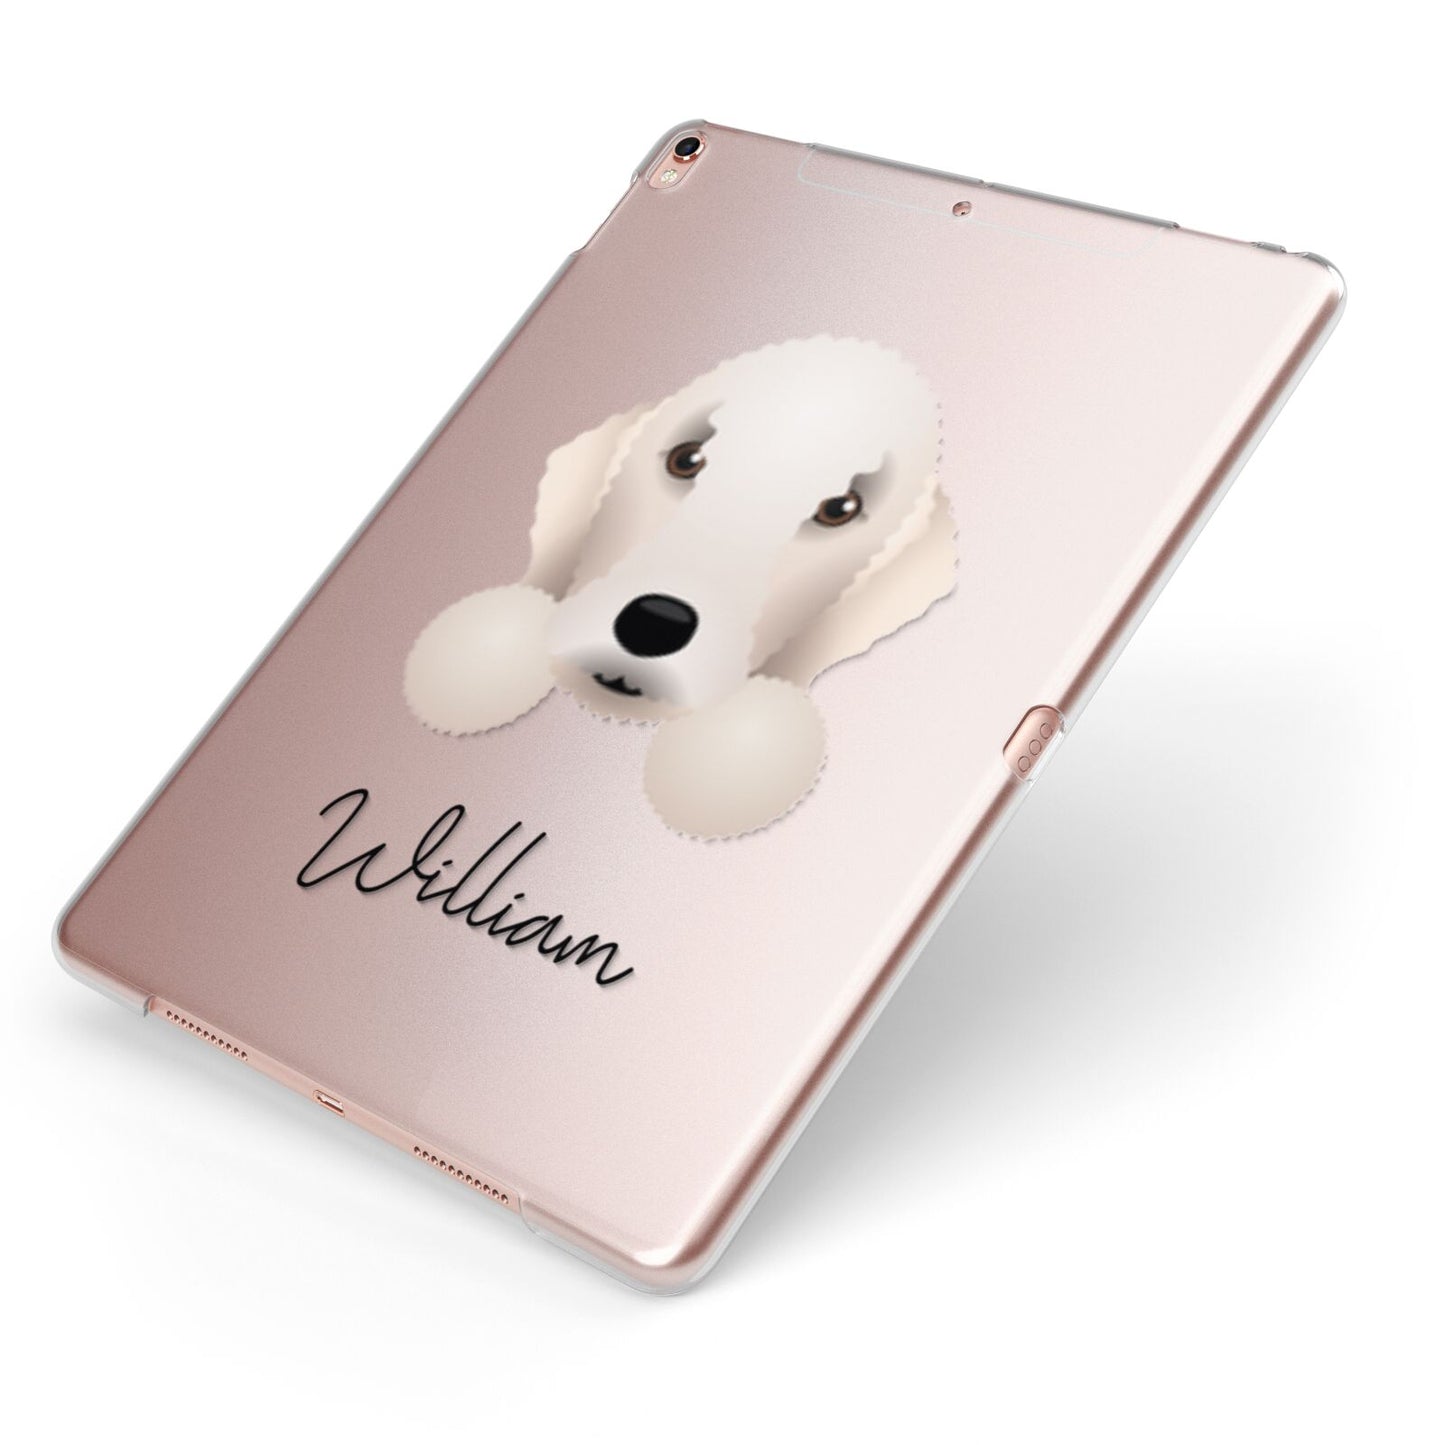 Bedlington Terrier Personalised Apple iPad Case on Rose Gold iPad Side View